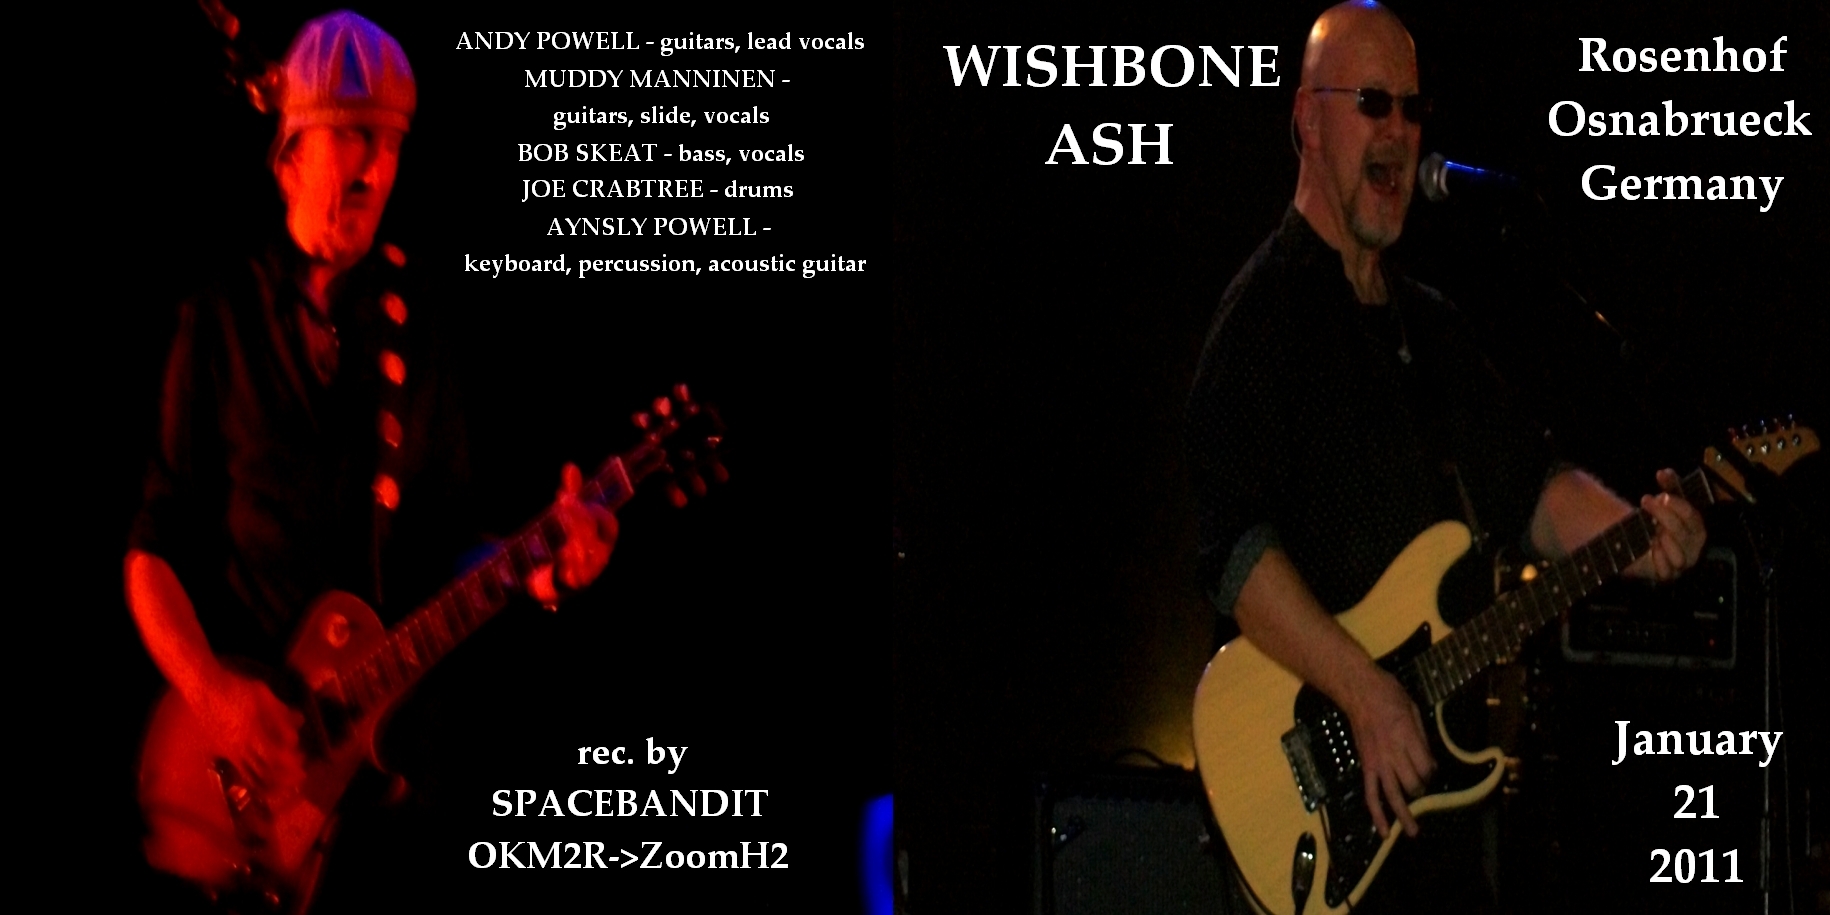 WishboneAsh2011-01-21RosenhofOsnabrueckGermany (1).jpg